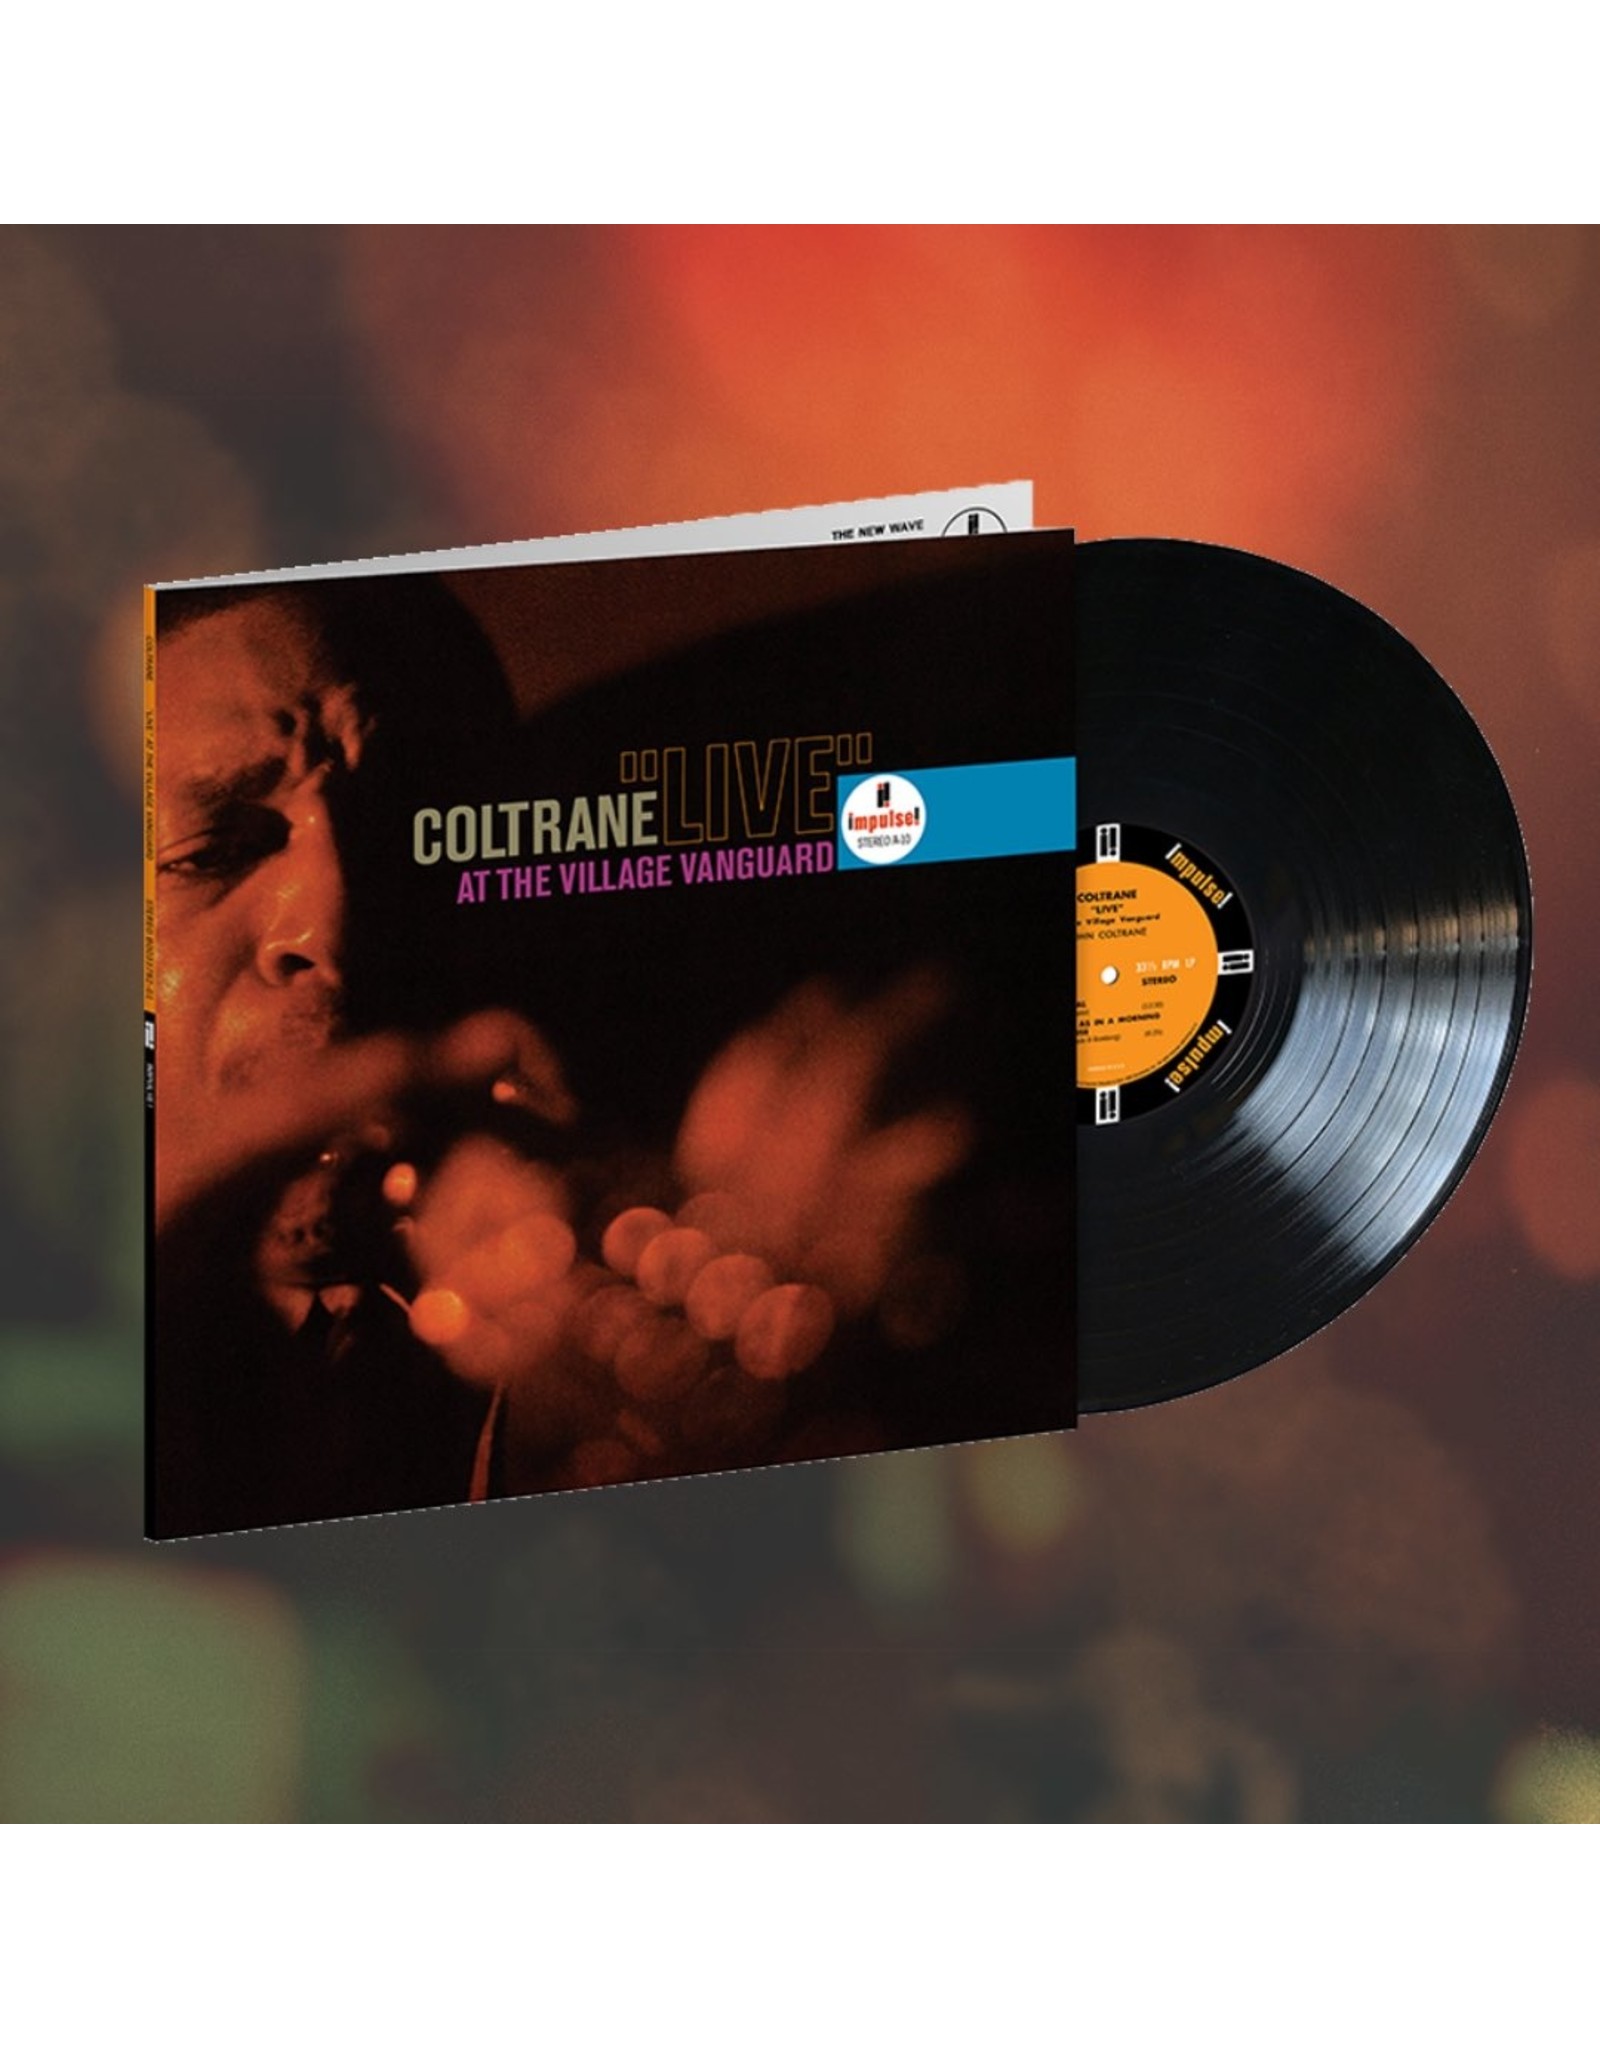 John Coltrane - "Live" At The Village Vanguard (Acoustic Sounds Series)